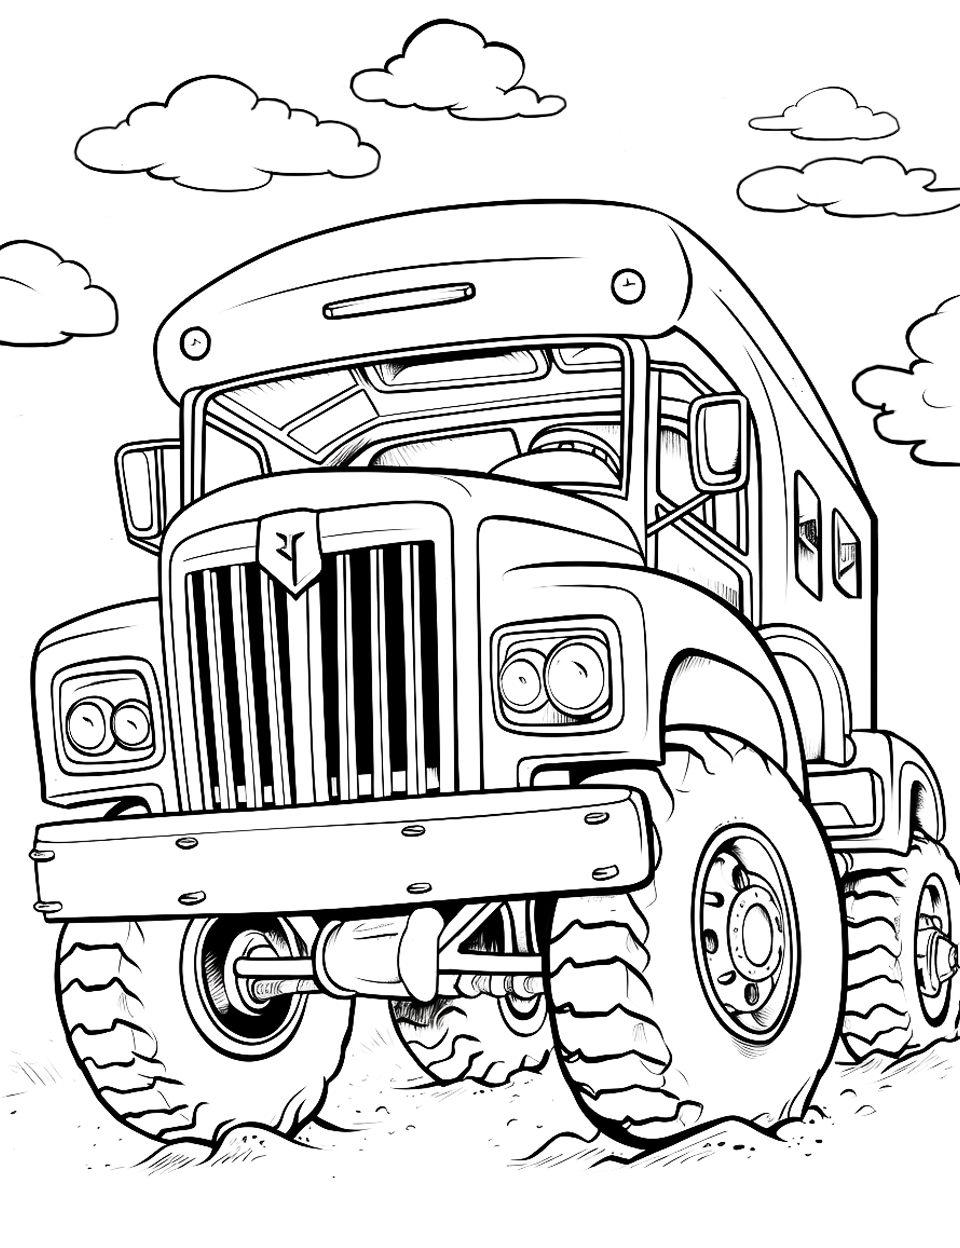 School Bus Scramble Monster Truck Coloring Page - A school bus converted into a monster truck.